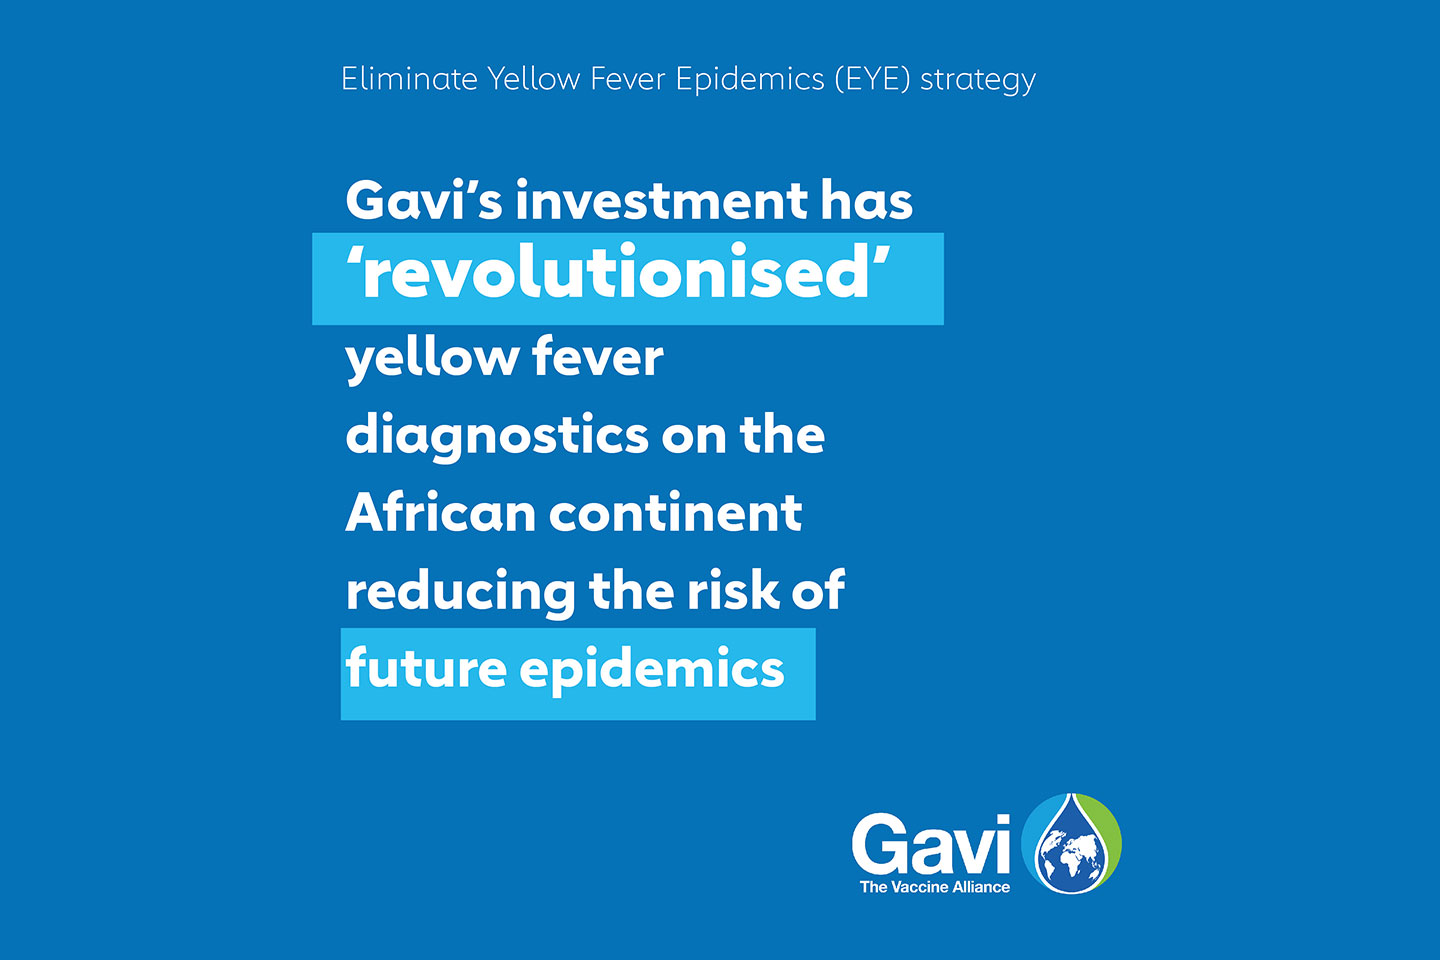 Gavi funding boosts yellow fever diagnostics capacity across Africa